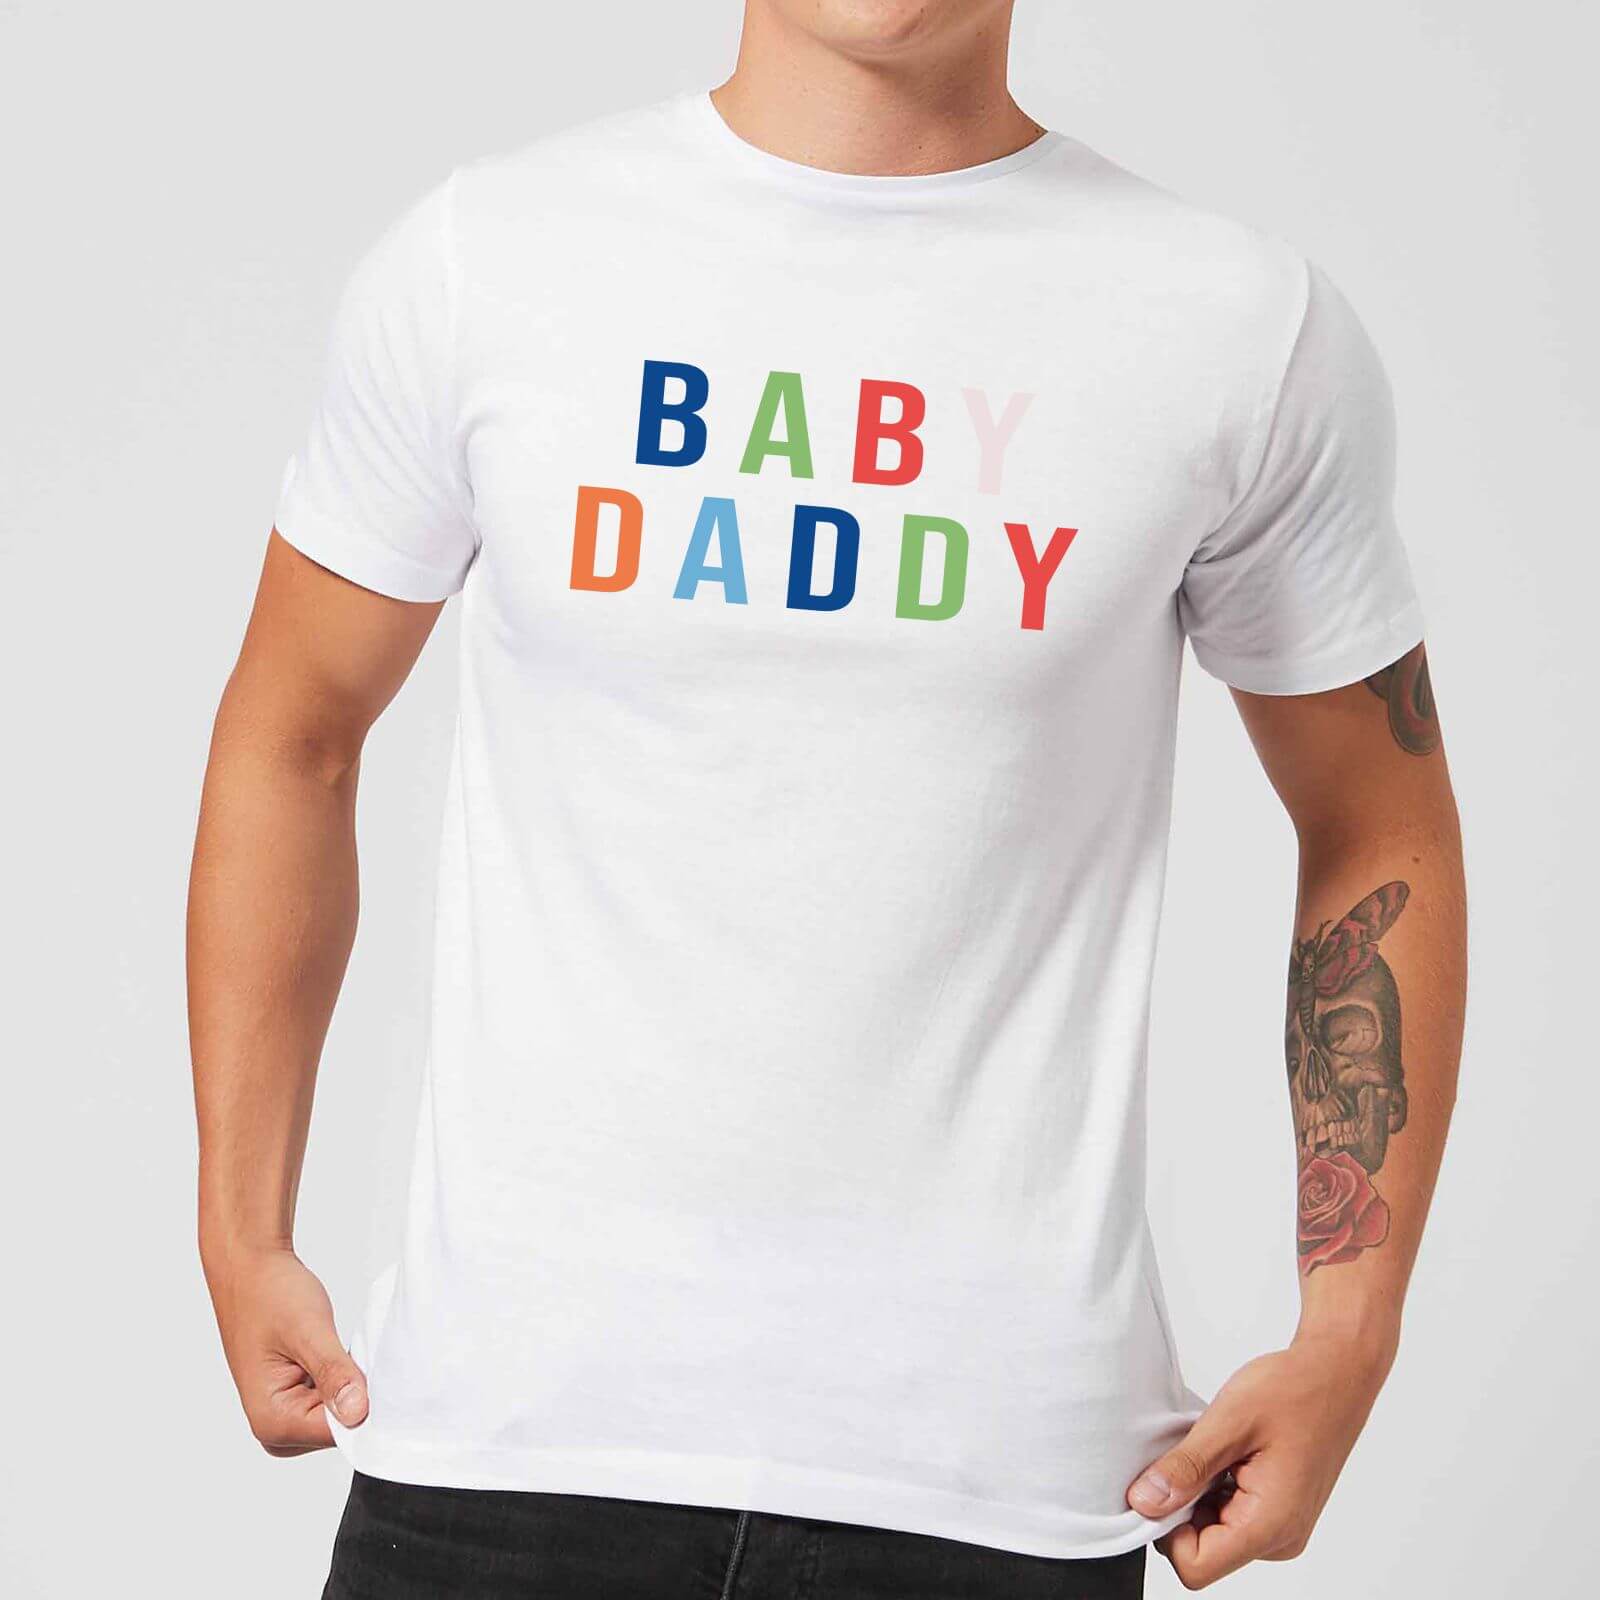 Baby Daddy Men's T-Shirt - White - M - White